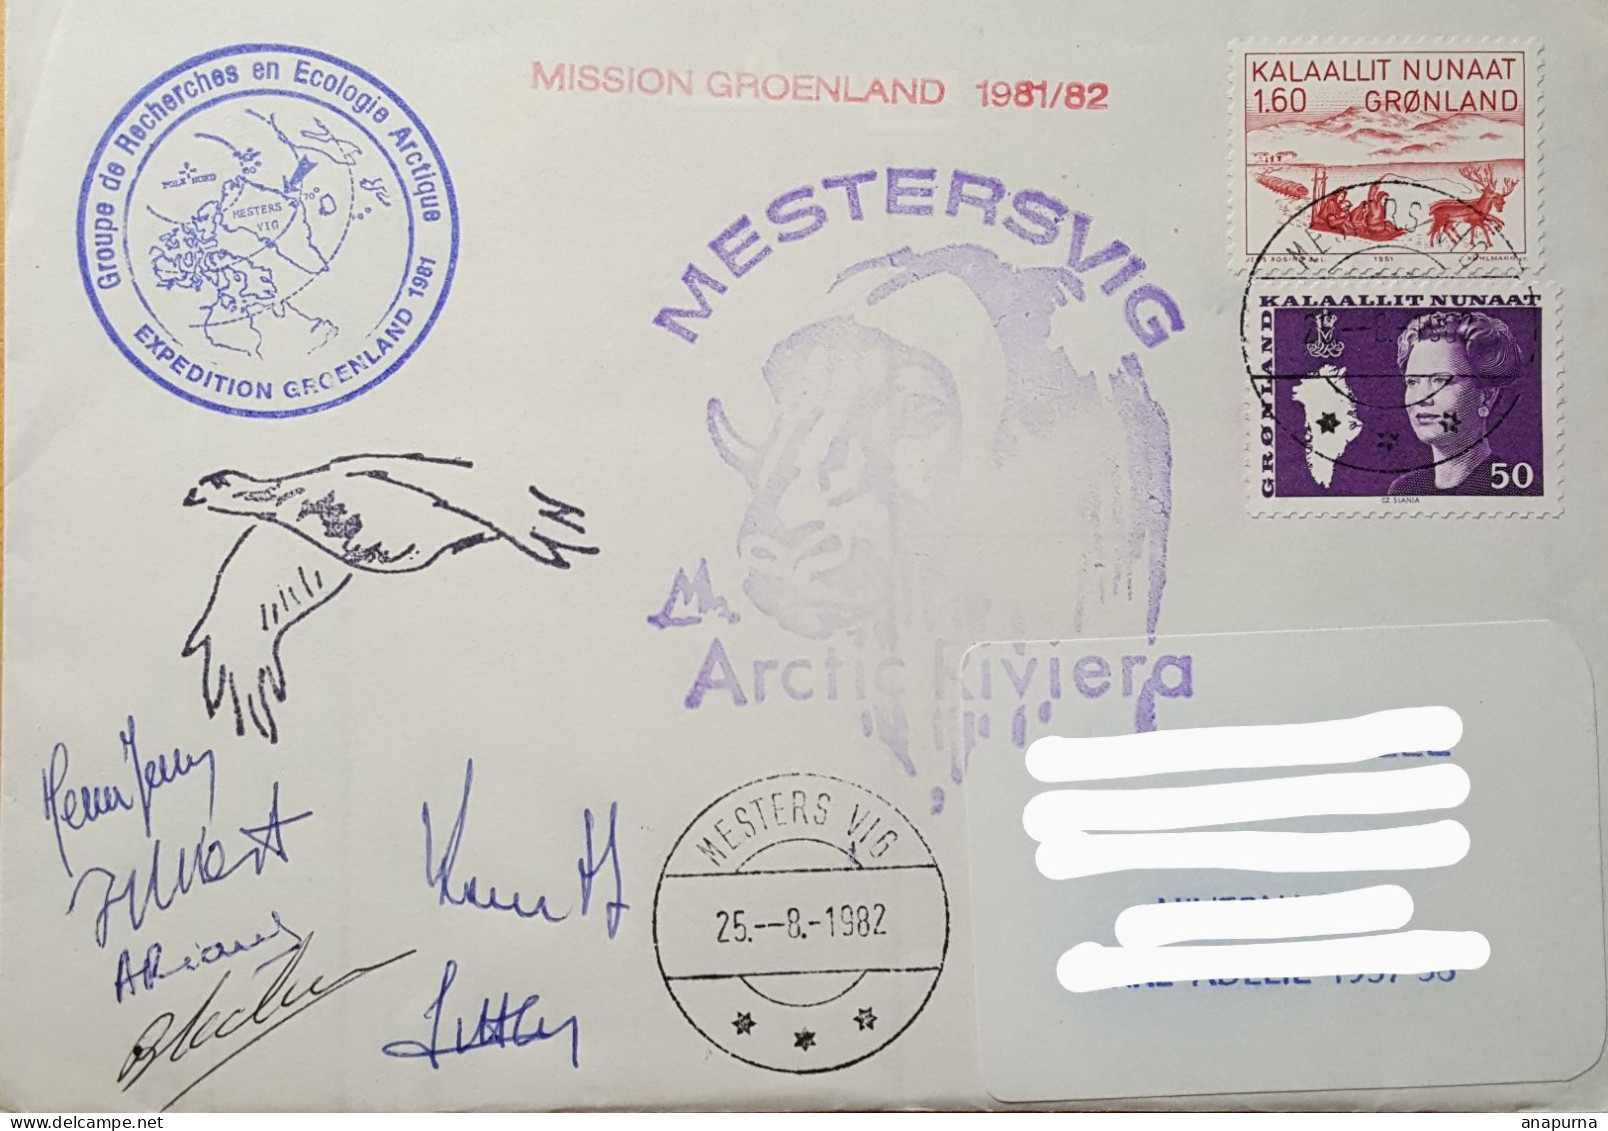 Pli Groenland. Expédition Du Groupe Recherche Ecologie Arctique 81/82. Mestersvig Arctic Riviera. 6 Signatures. - Programmi Di Ricerca